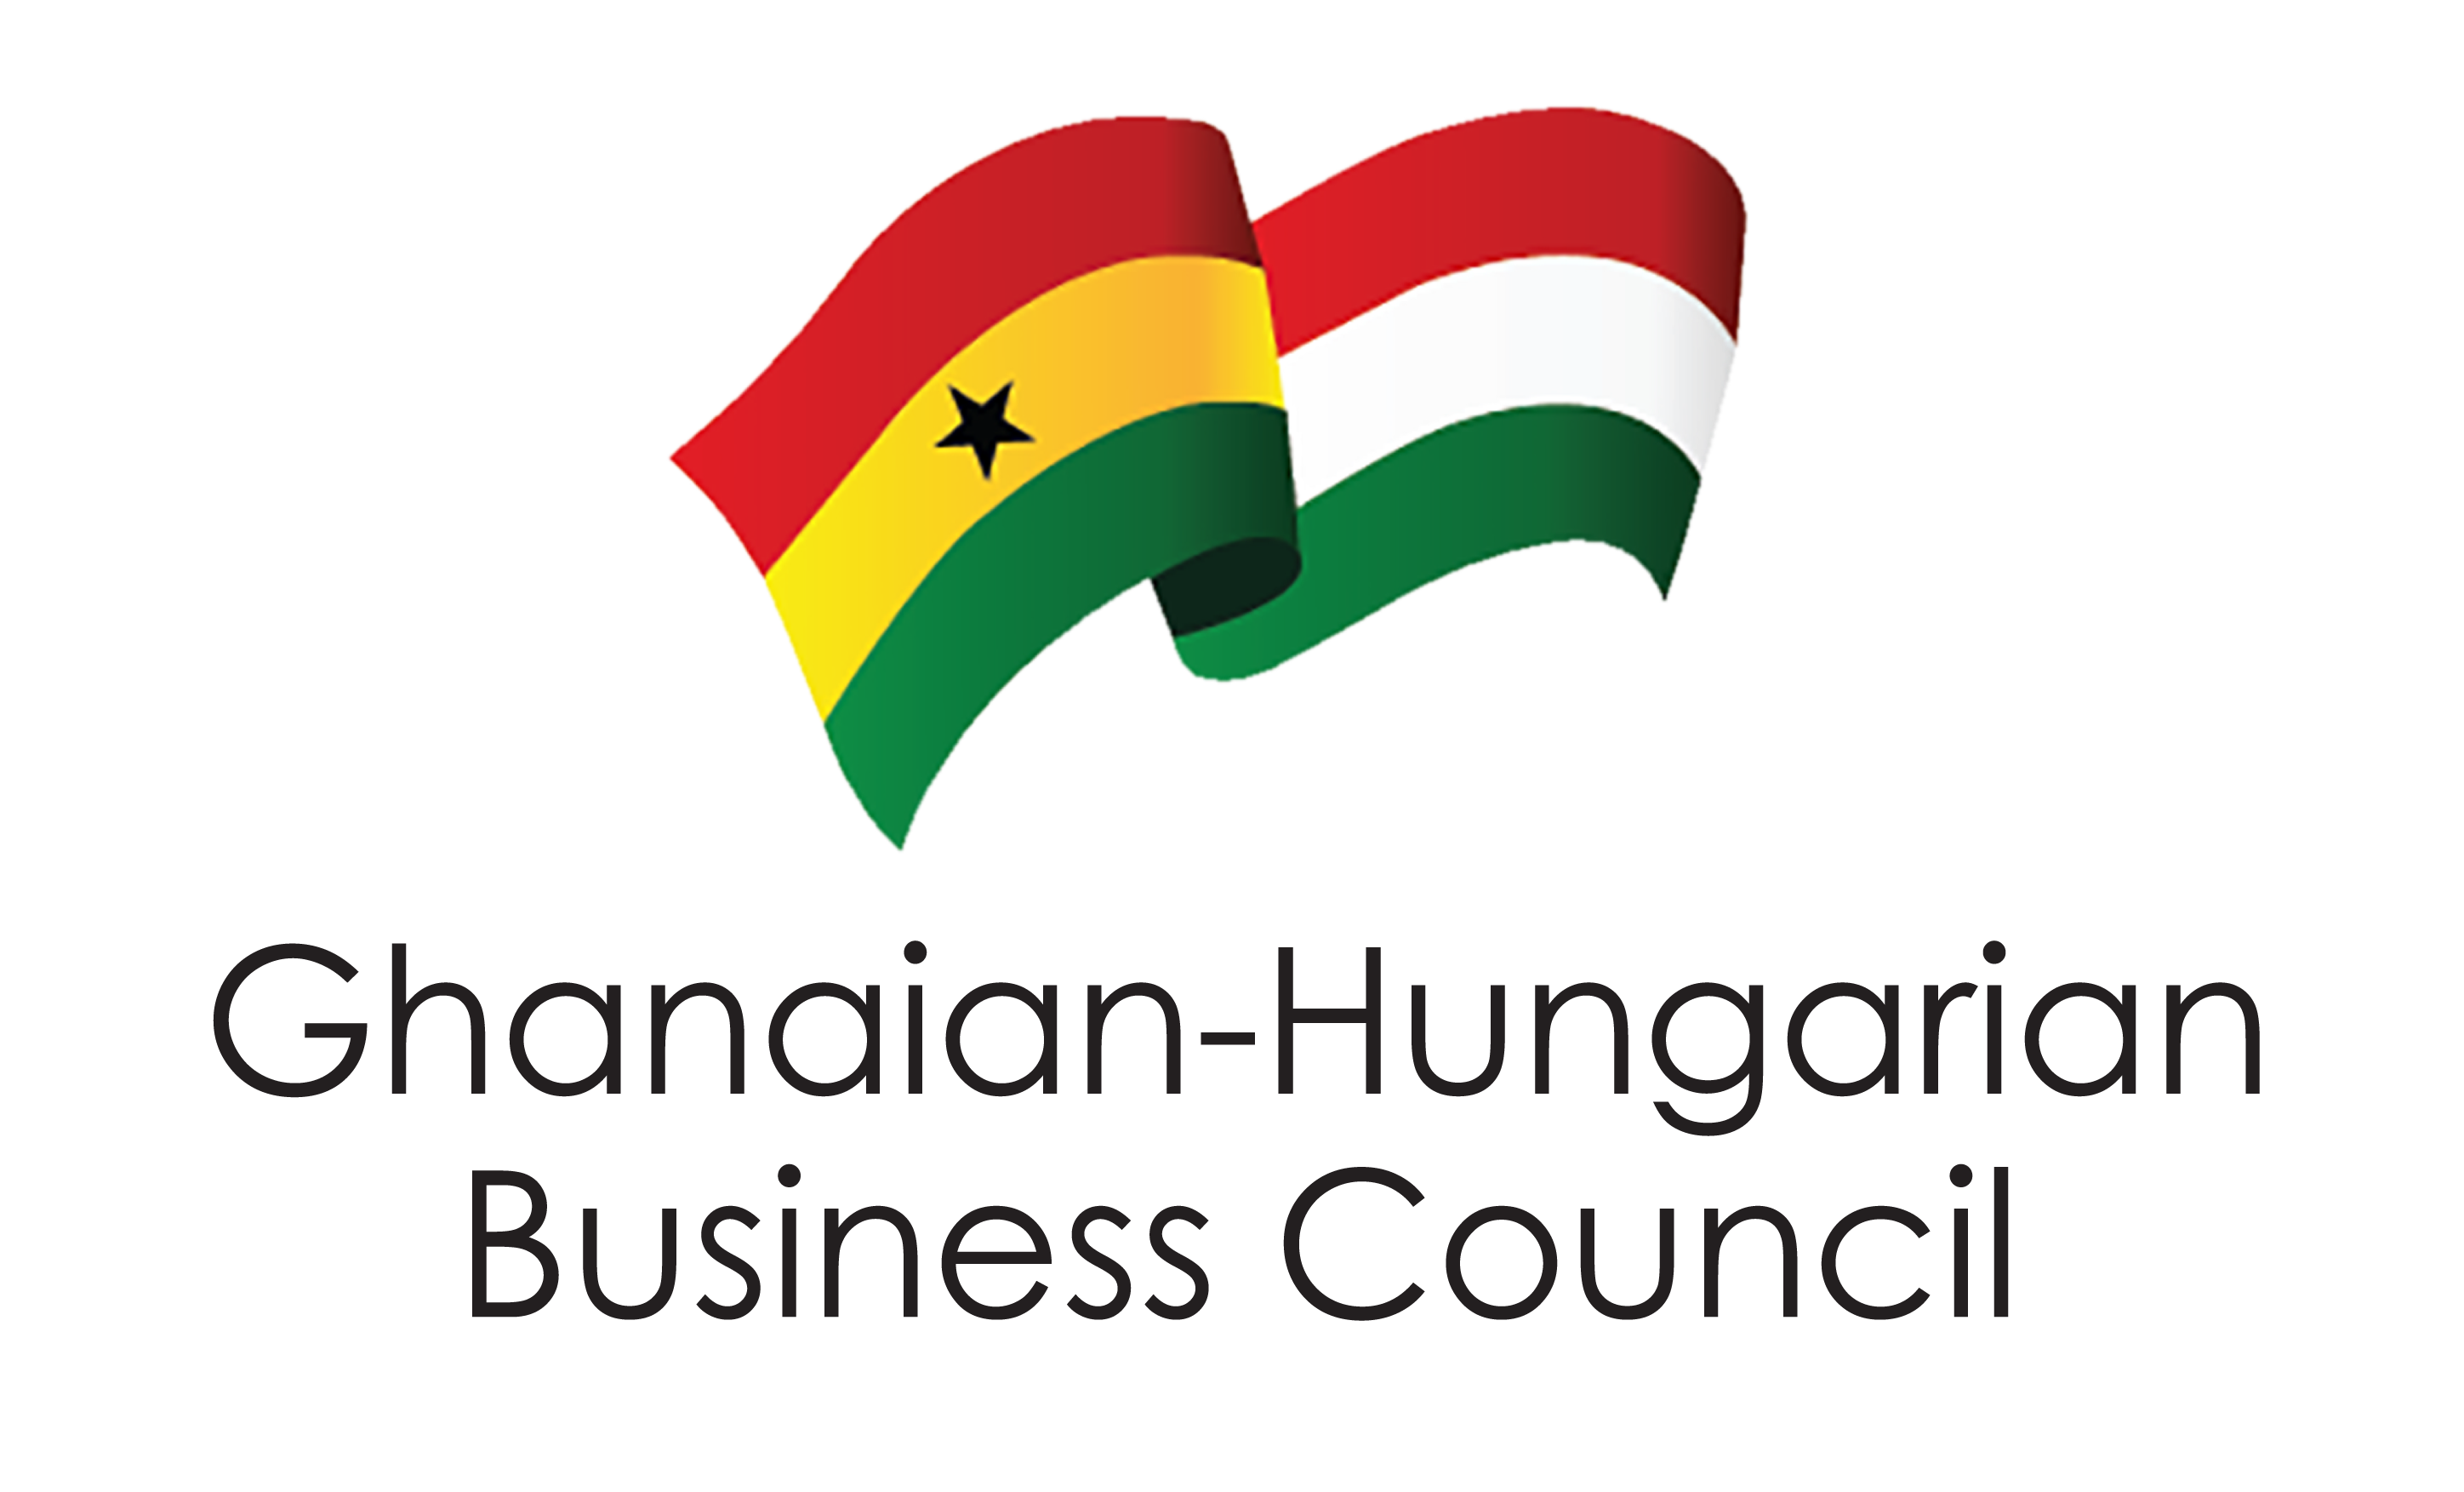 Ghanaian - Hungarian Business Council